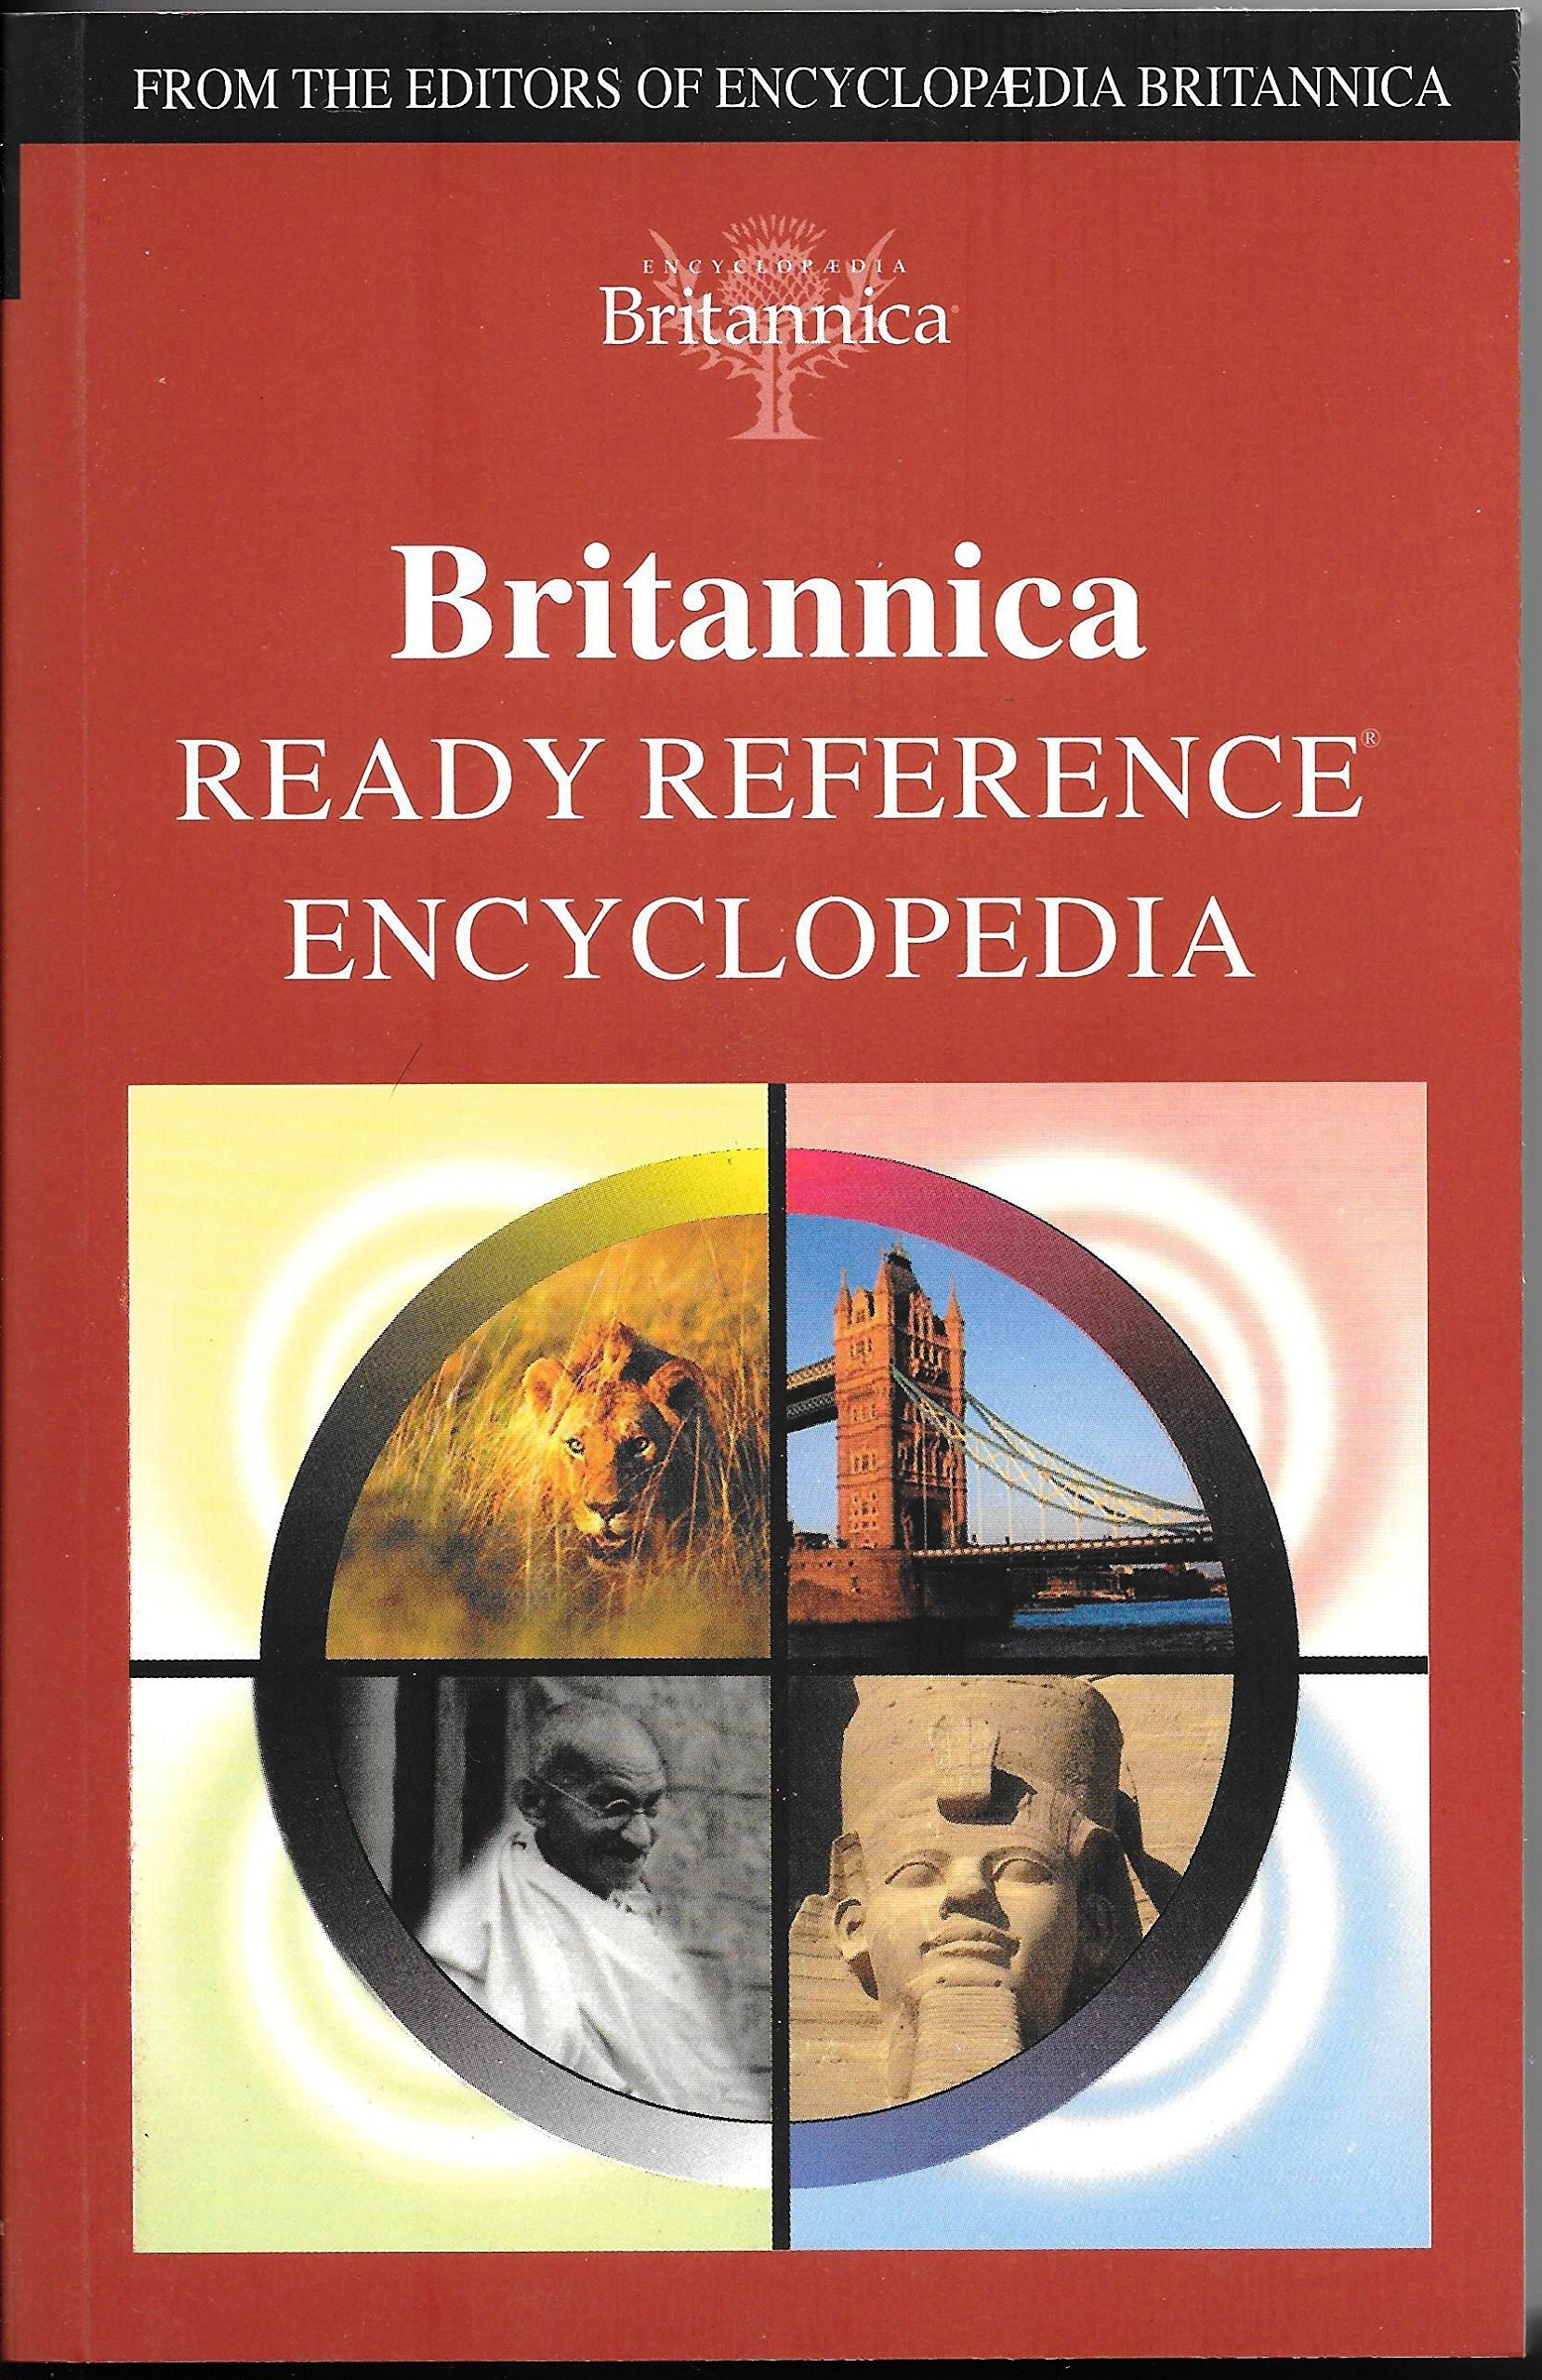 Britannica Ready Reference Encyclopedia - Reti Solovets - Vol.10